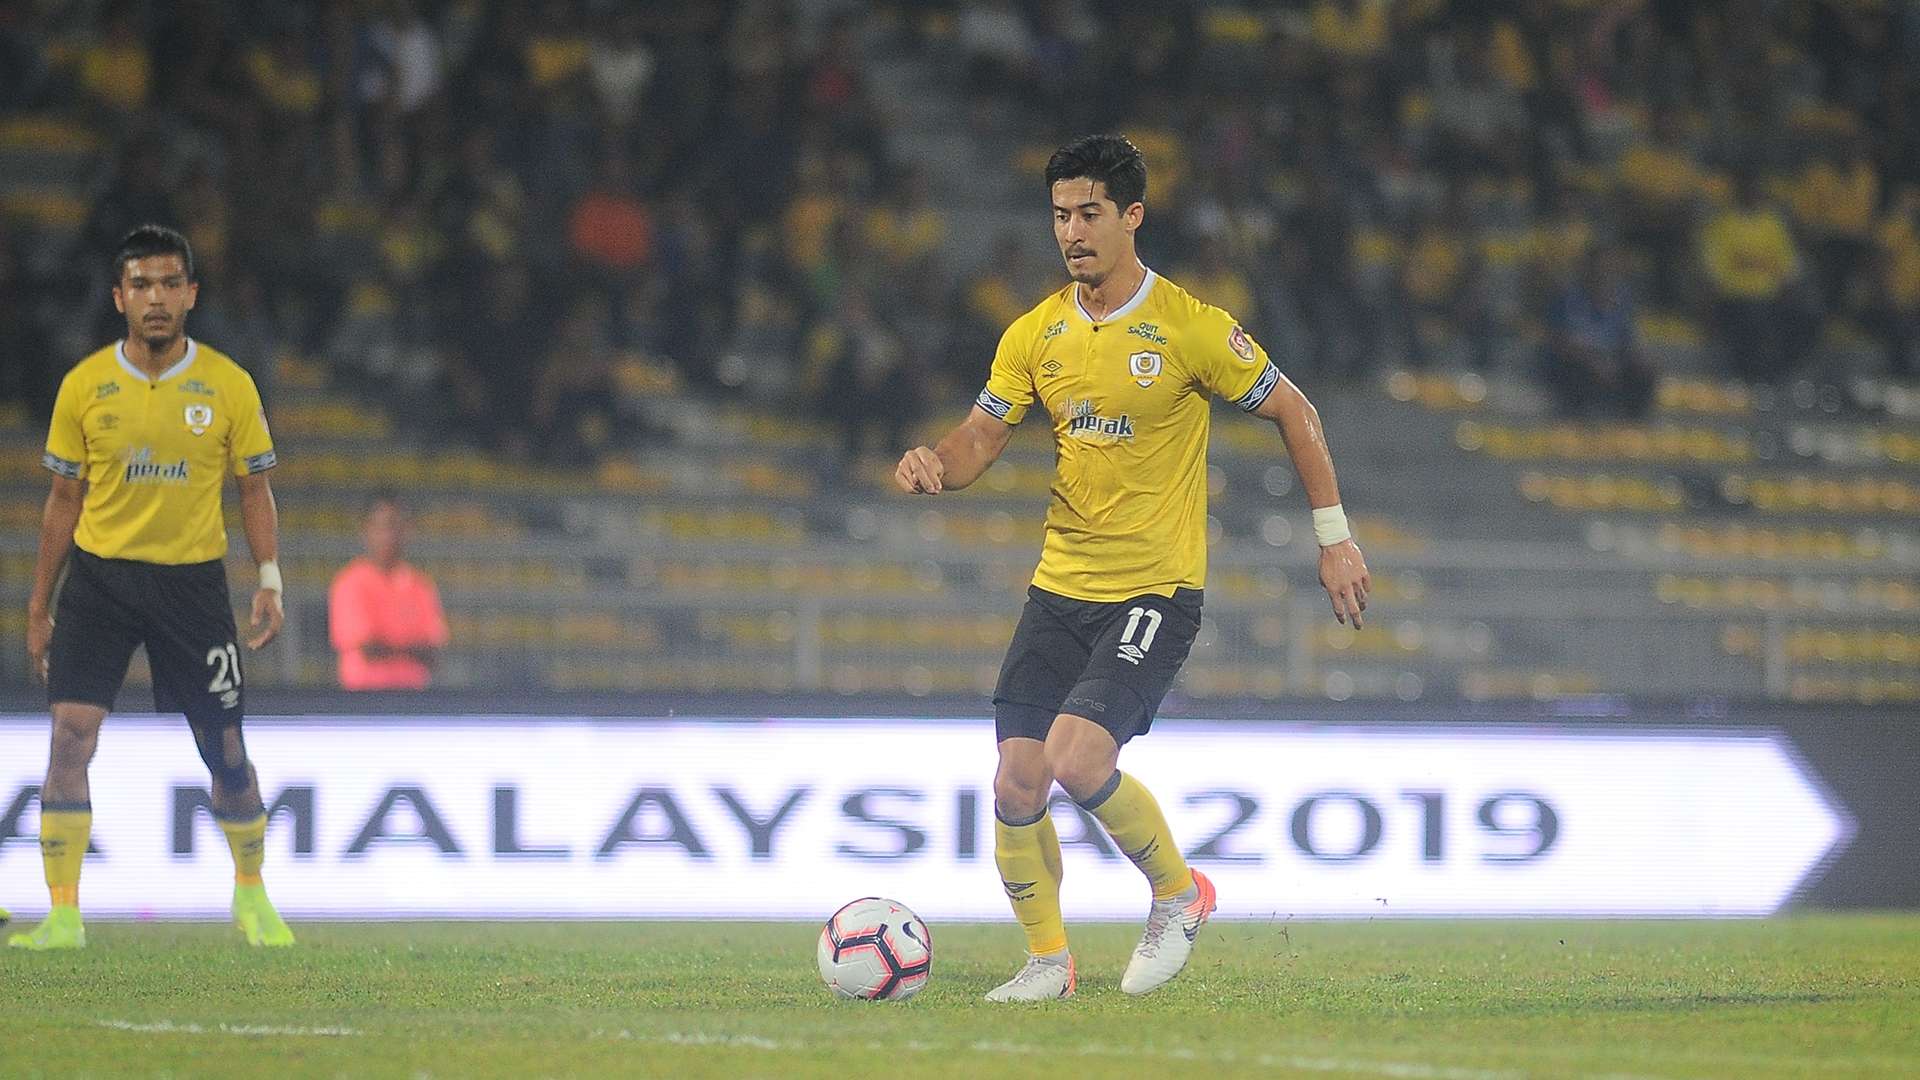 Brendan Gan, Perak v Pulau Pinang, Malaysia Cup, 17 Aug 2019